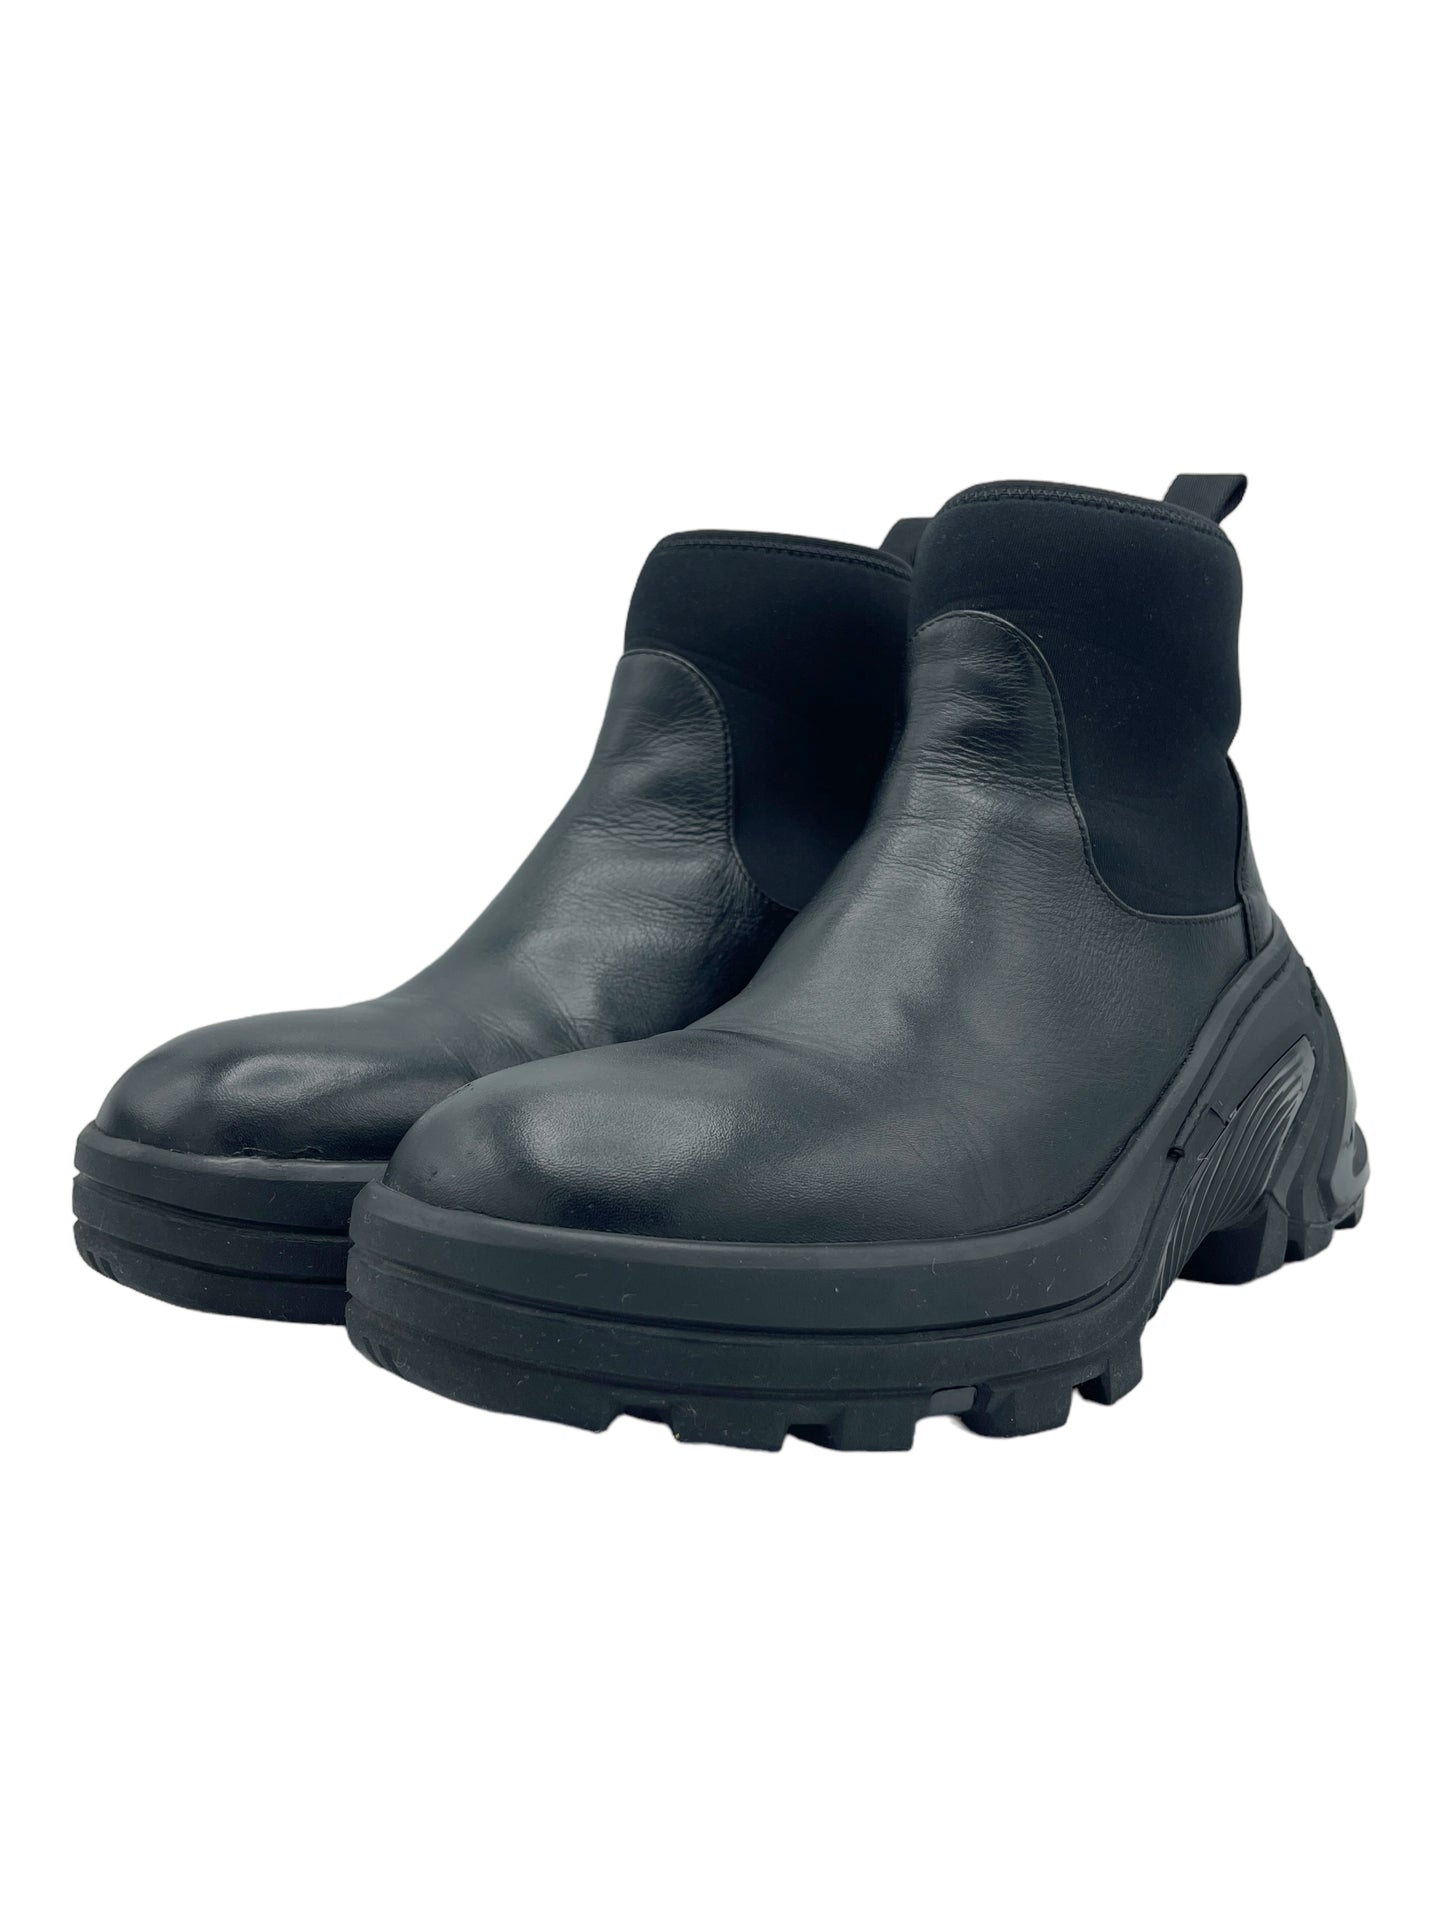 1017 ALYX 9SM Black Leather Elasticized Boots 9 M / 10.5 W